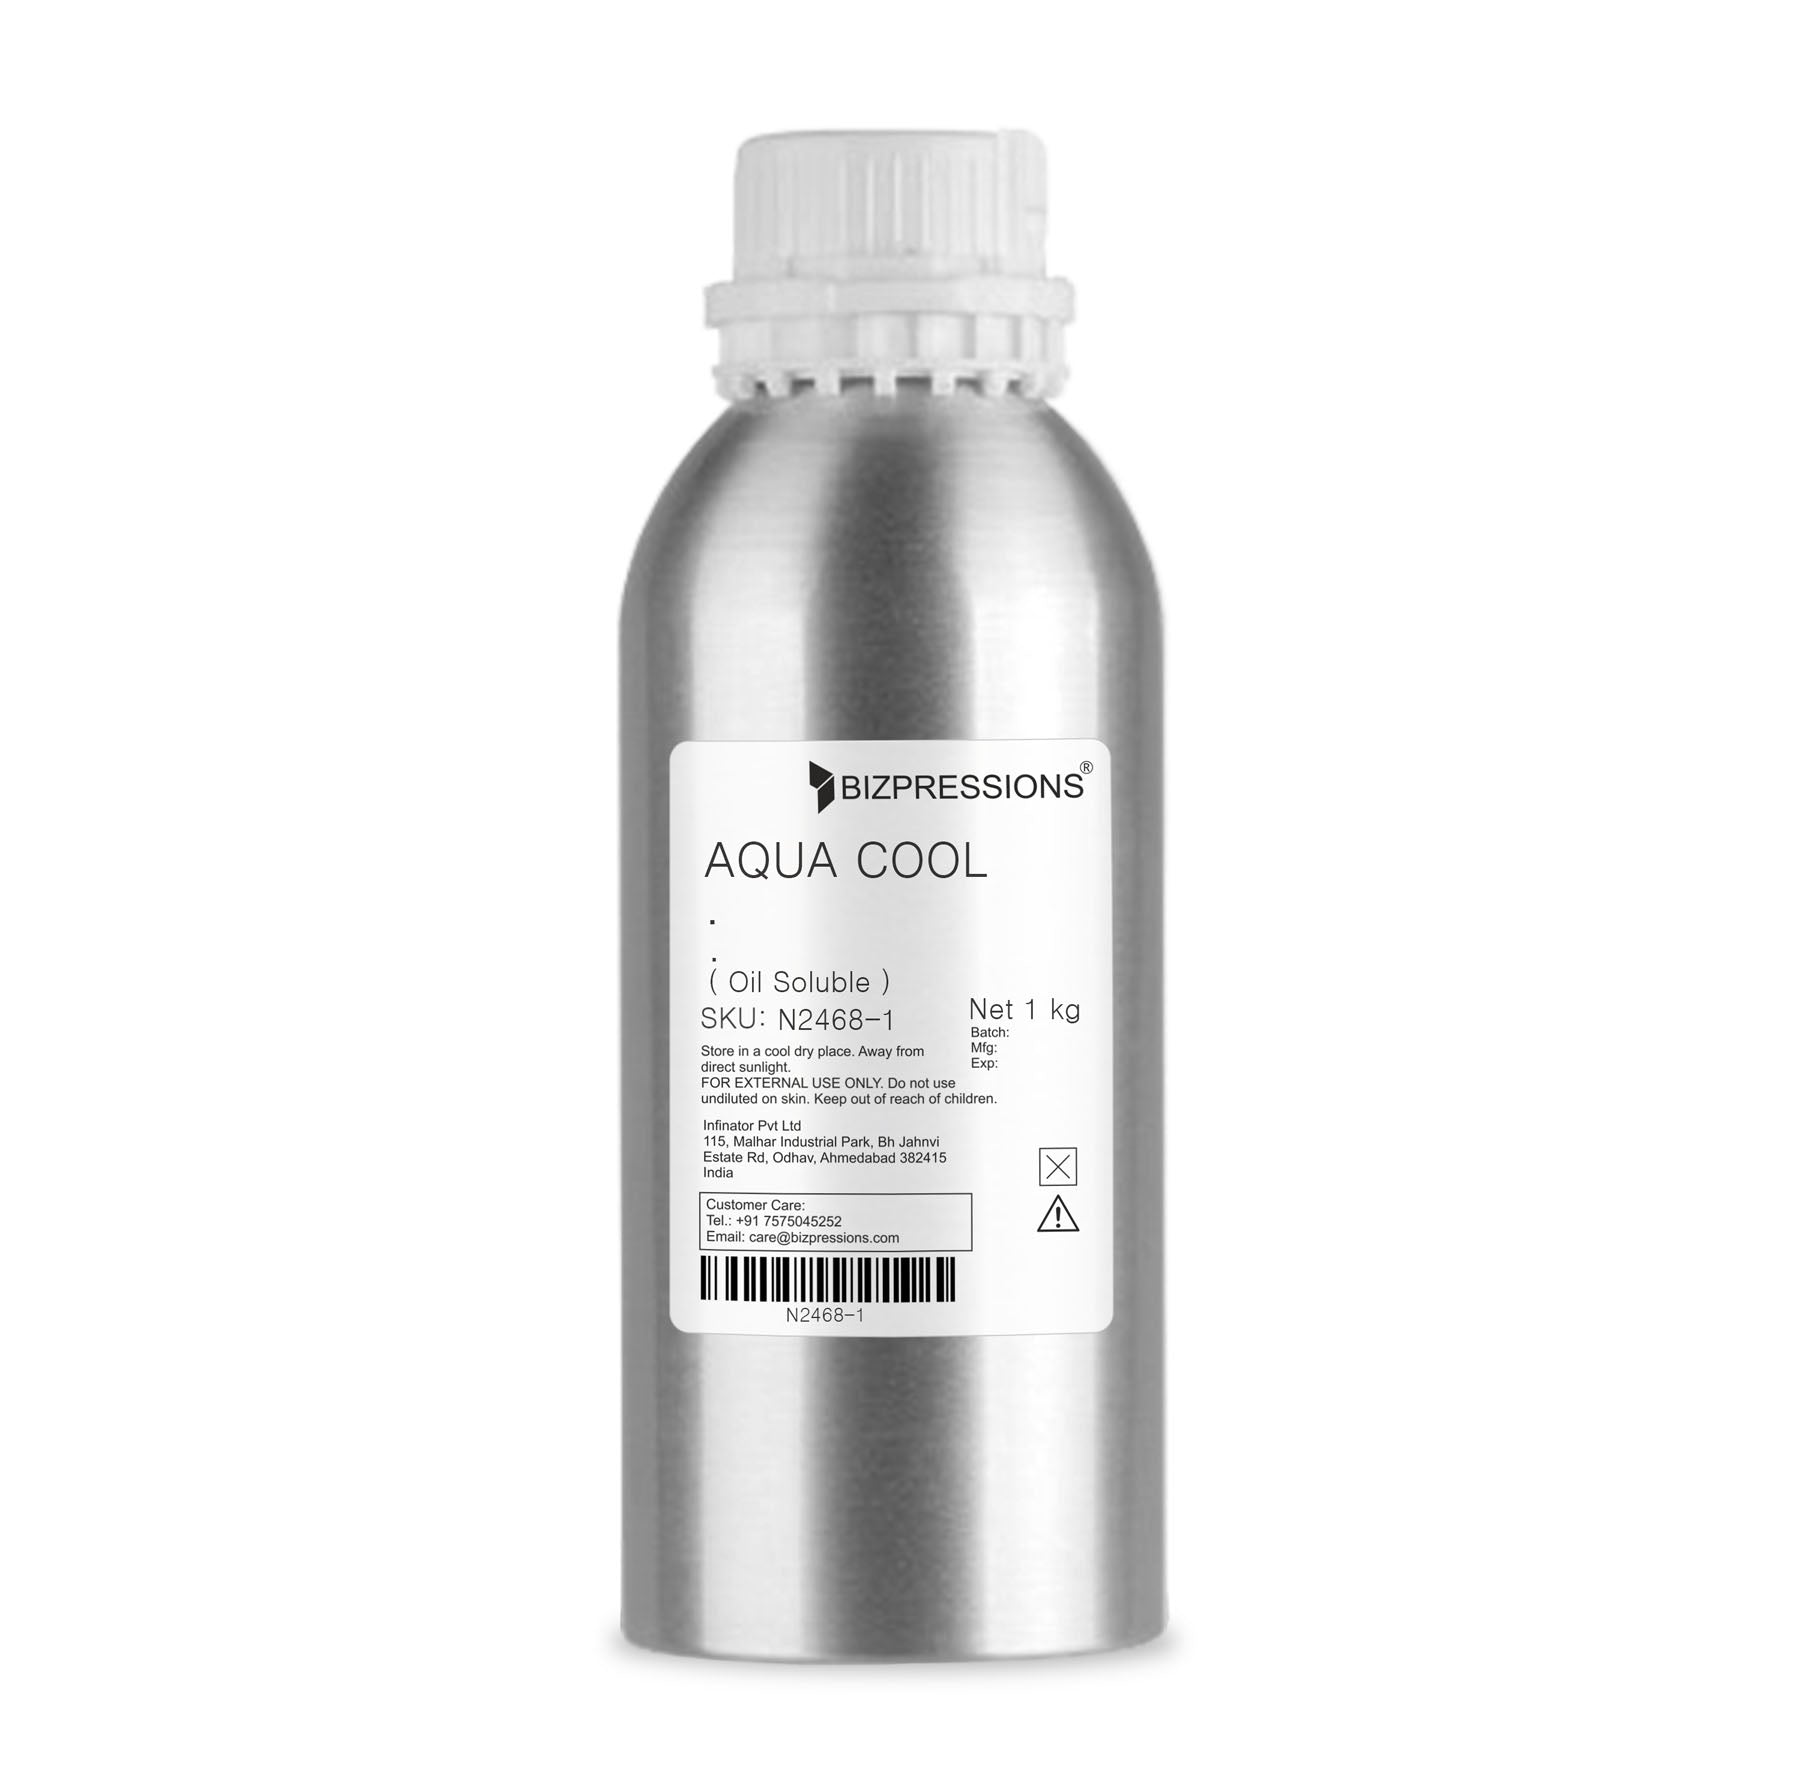 AQUA COOL - Fragrance ( Oil Soluble ) - 1 kg